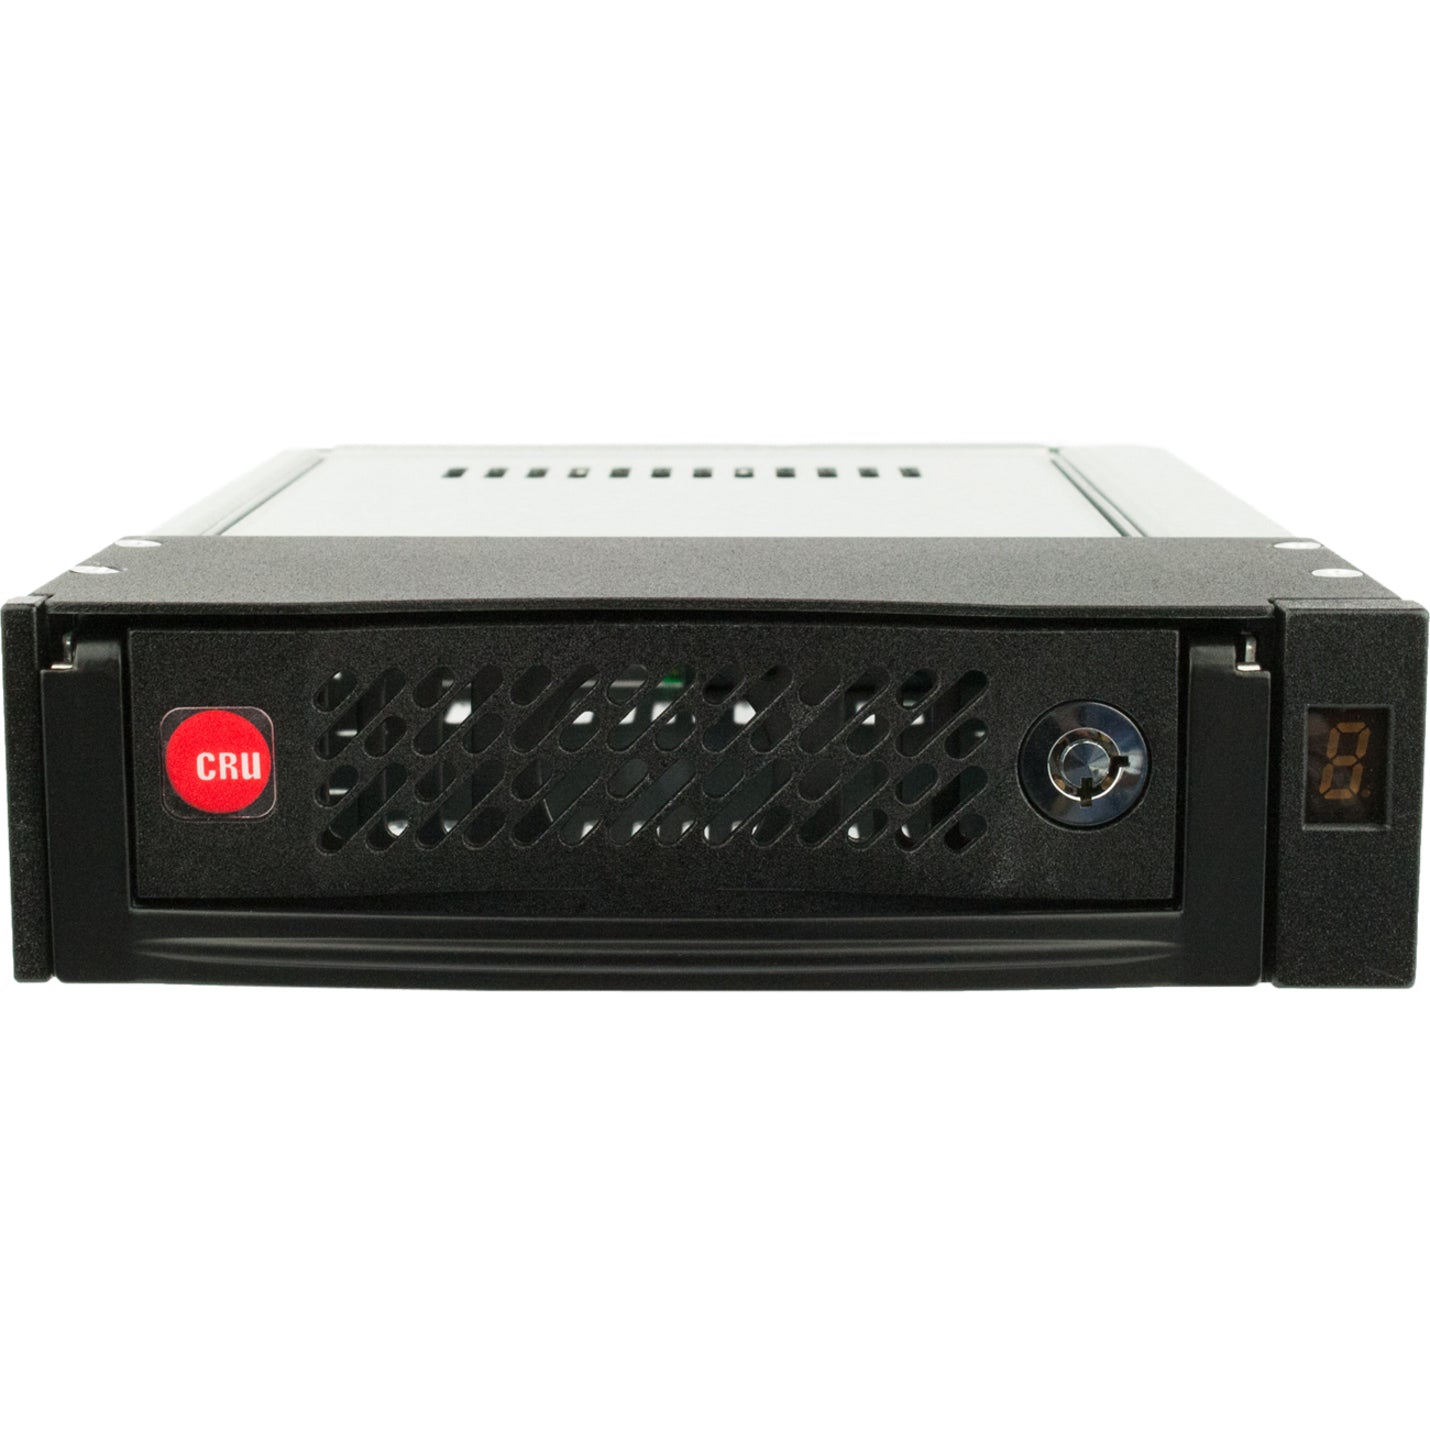 CRU 6546-6400-0500 DE110 SATA 6G Complete Assembly, Includes Frame and Carrier for SATA Drives, Black